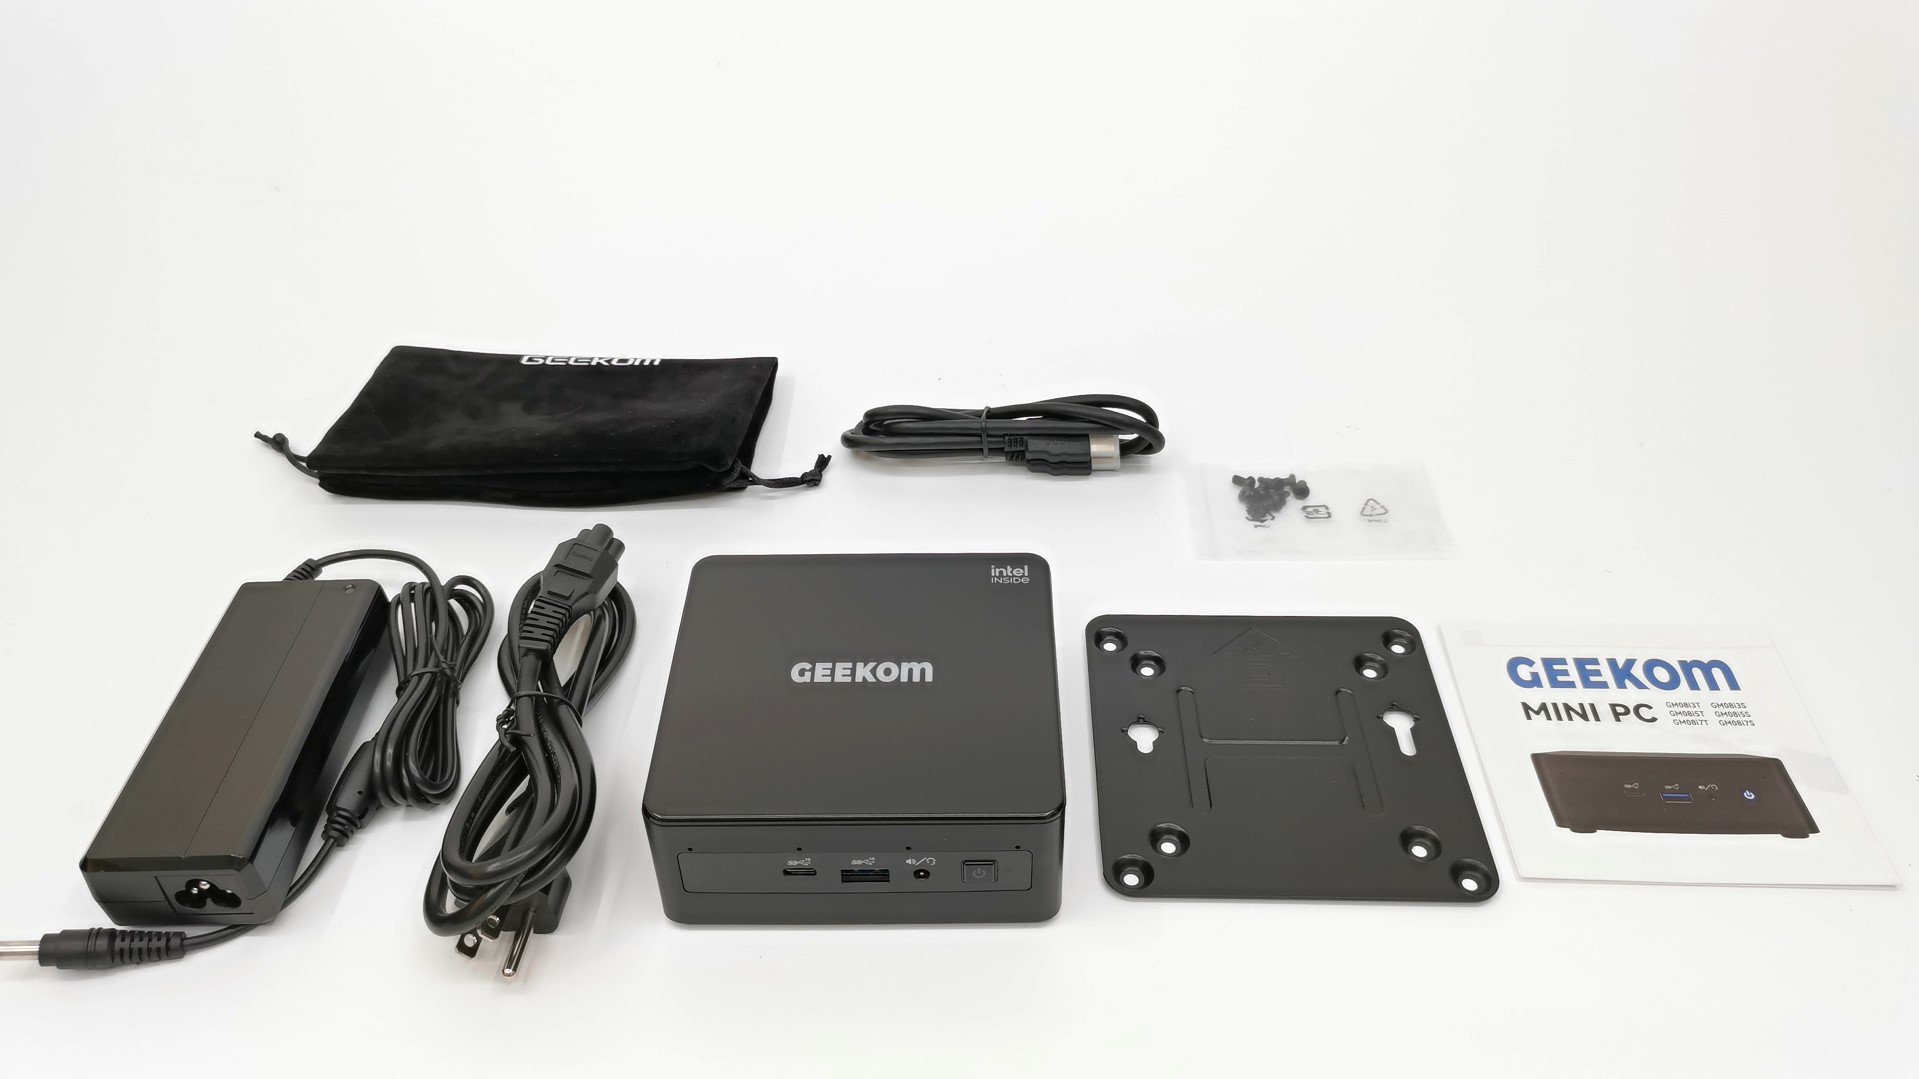 GEEKOM Mini IT8 Mini PC package contents